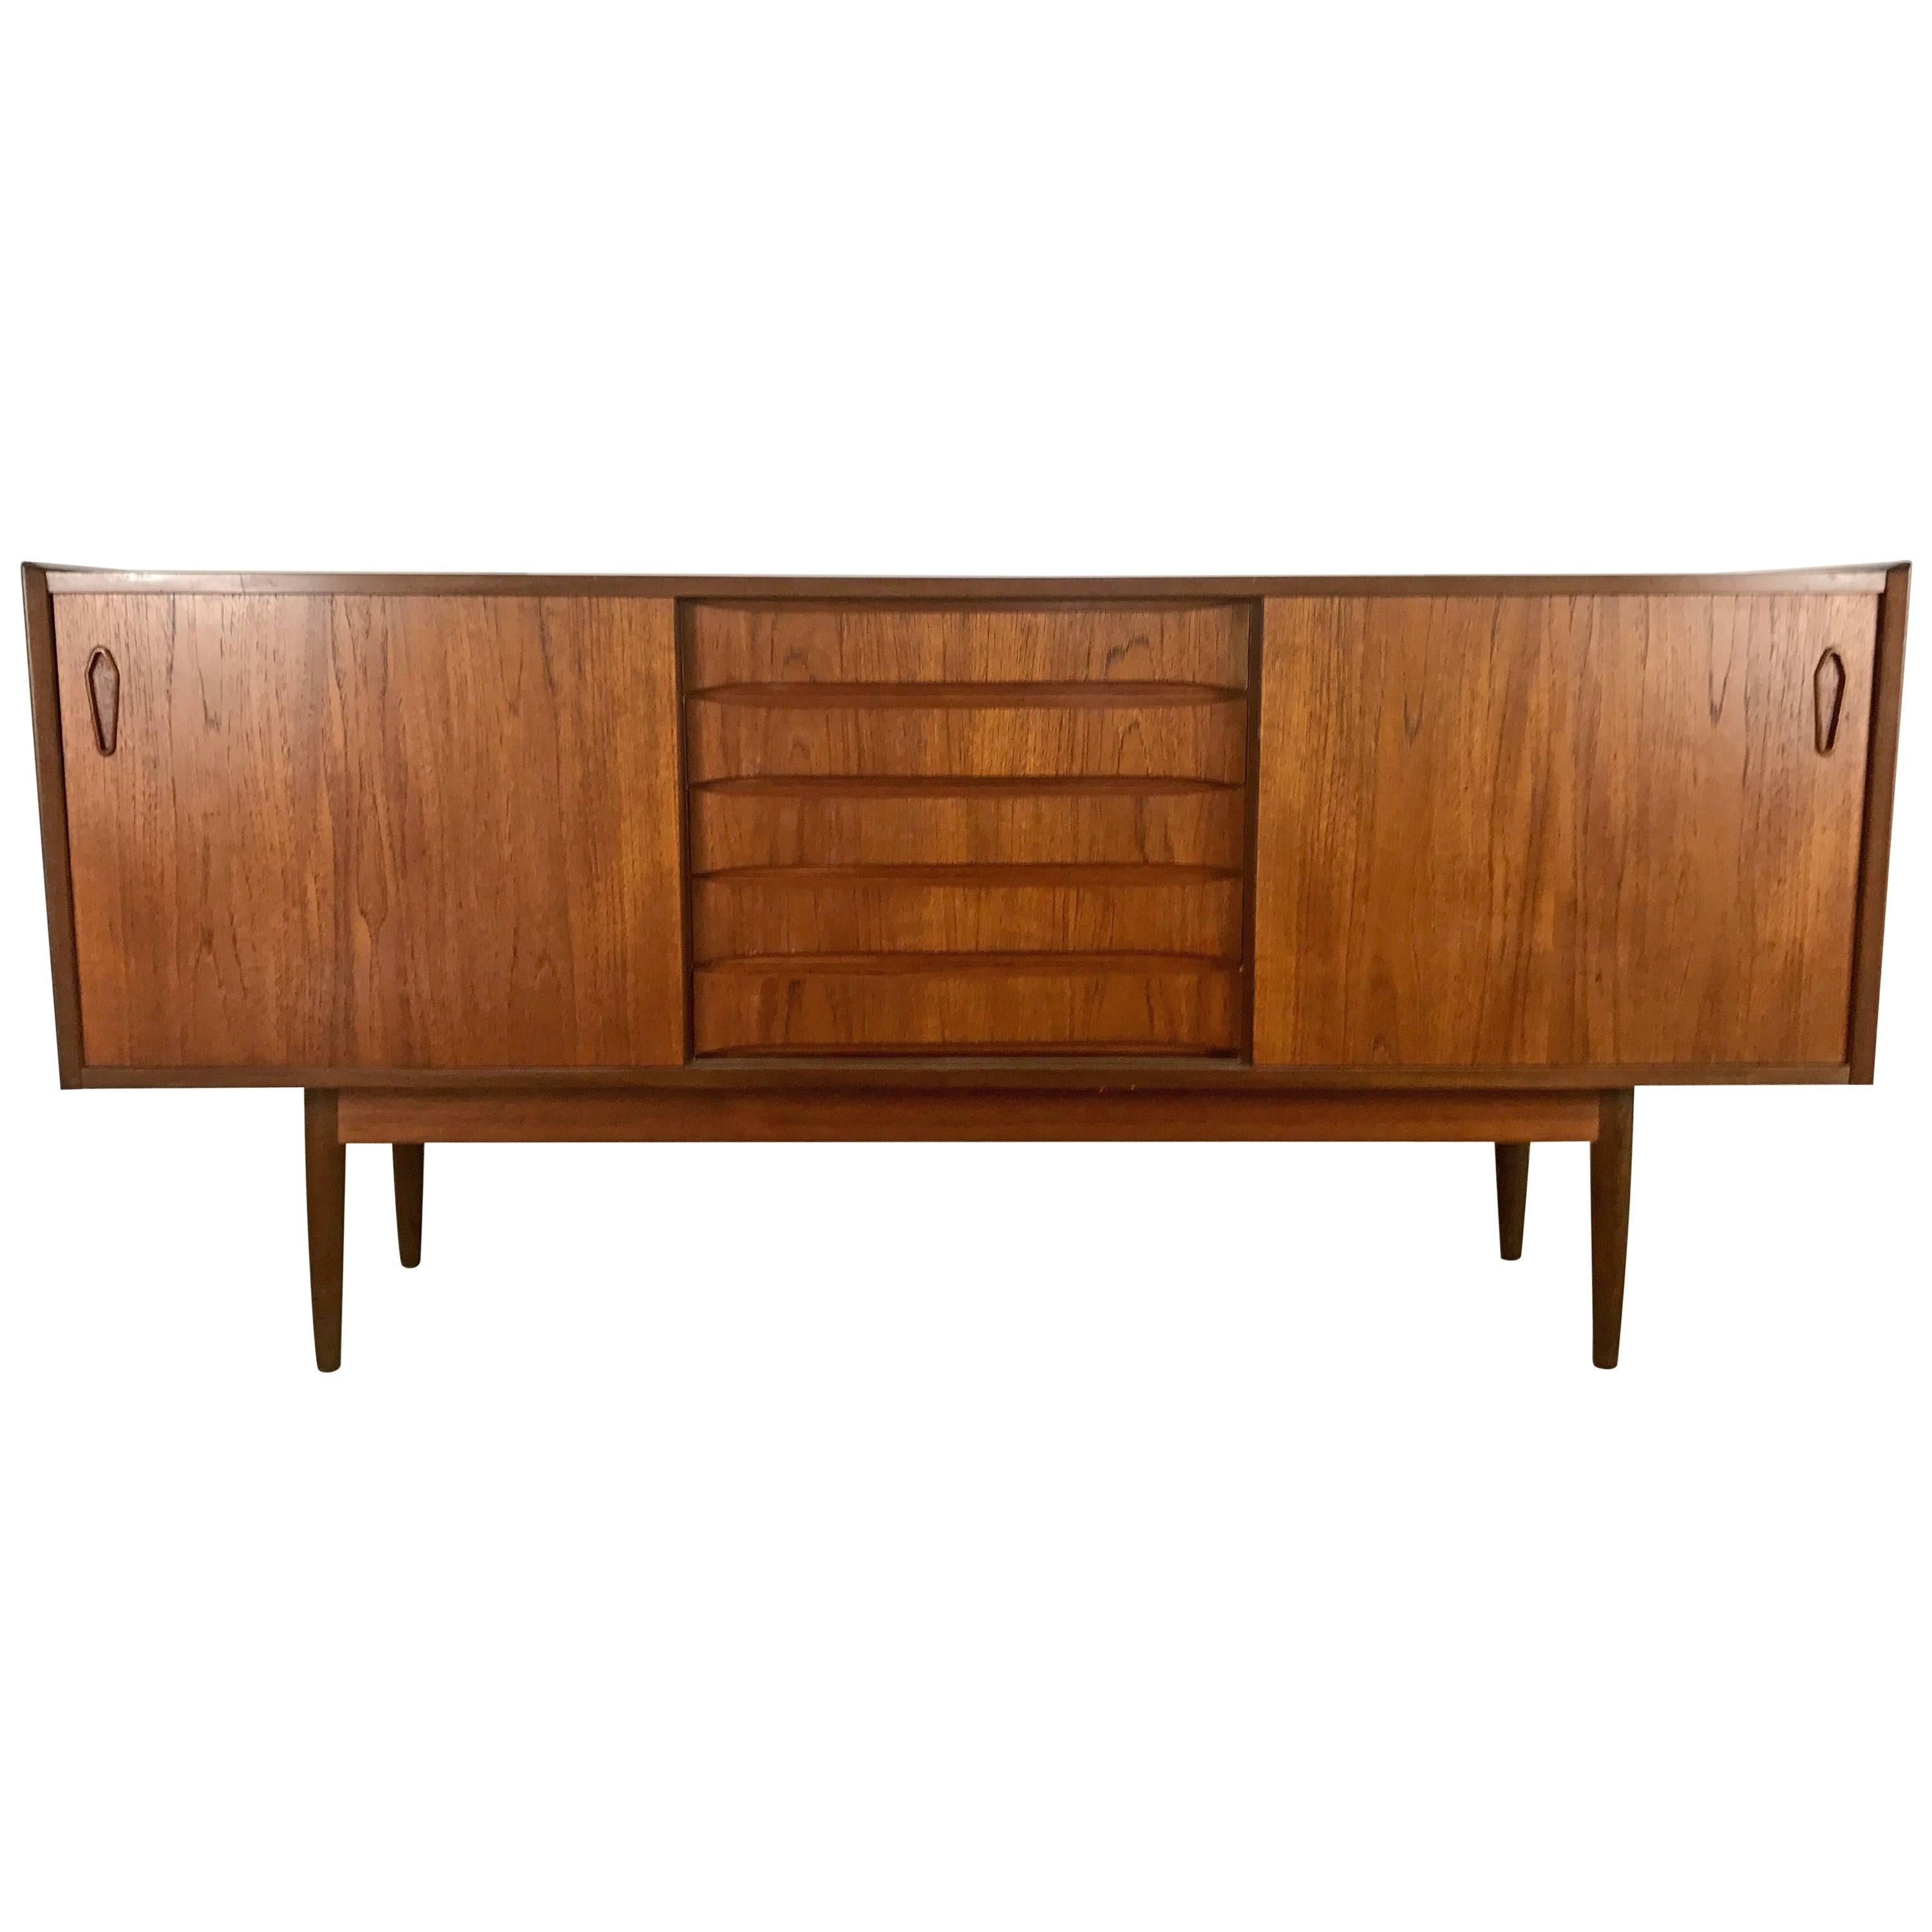 Classic Danish Modern Credenza/Sideboard, Figured Walnut, Arne Vodder